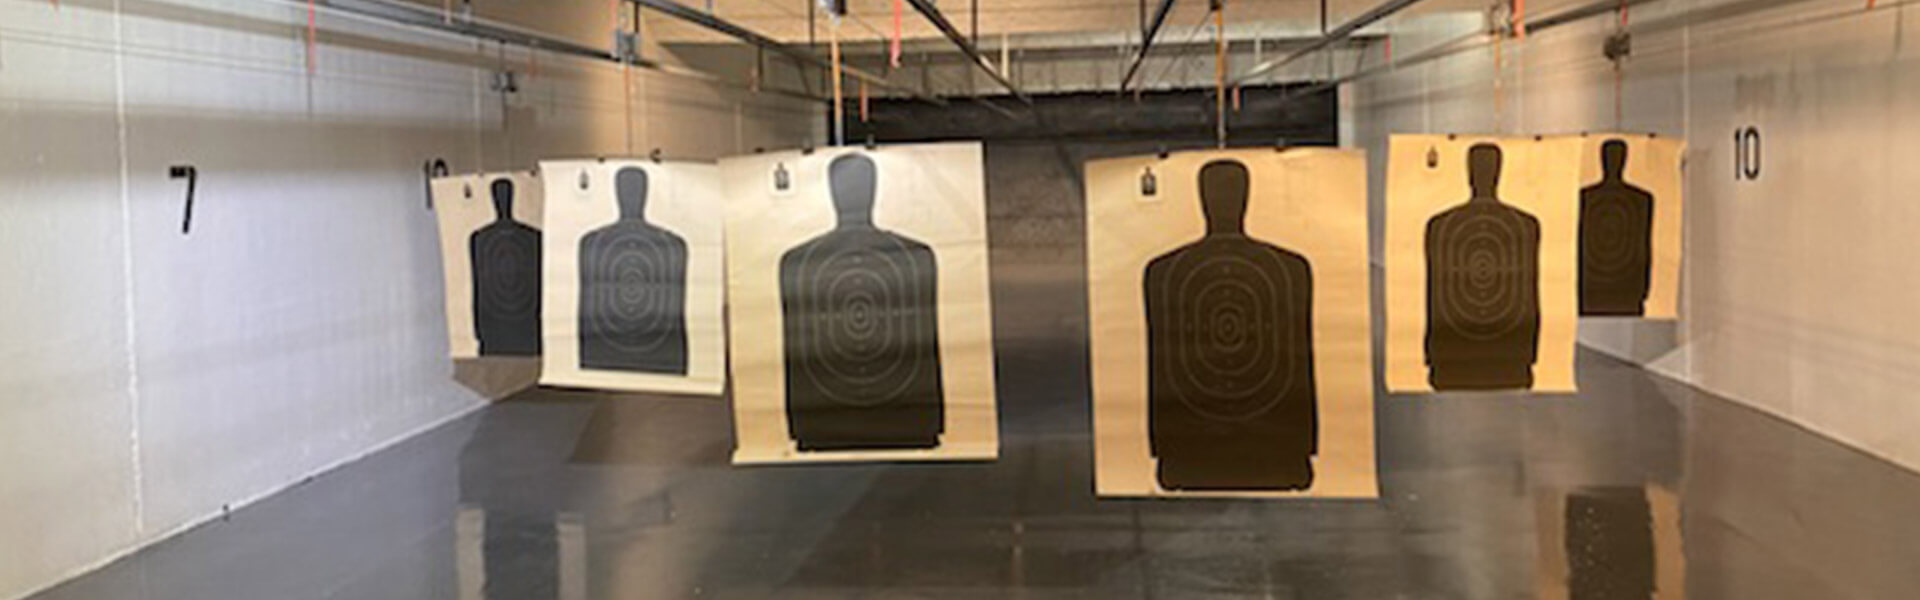 firearms training classes